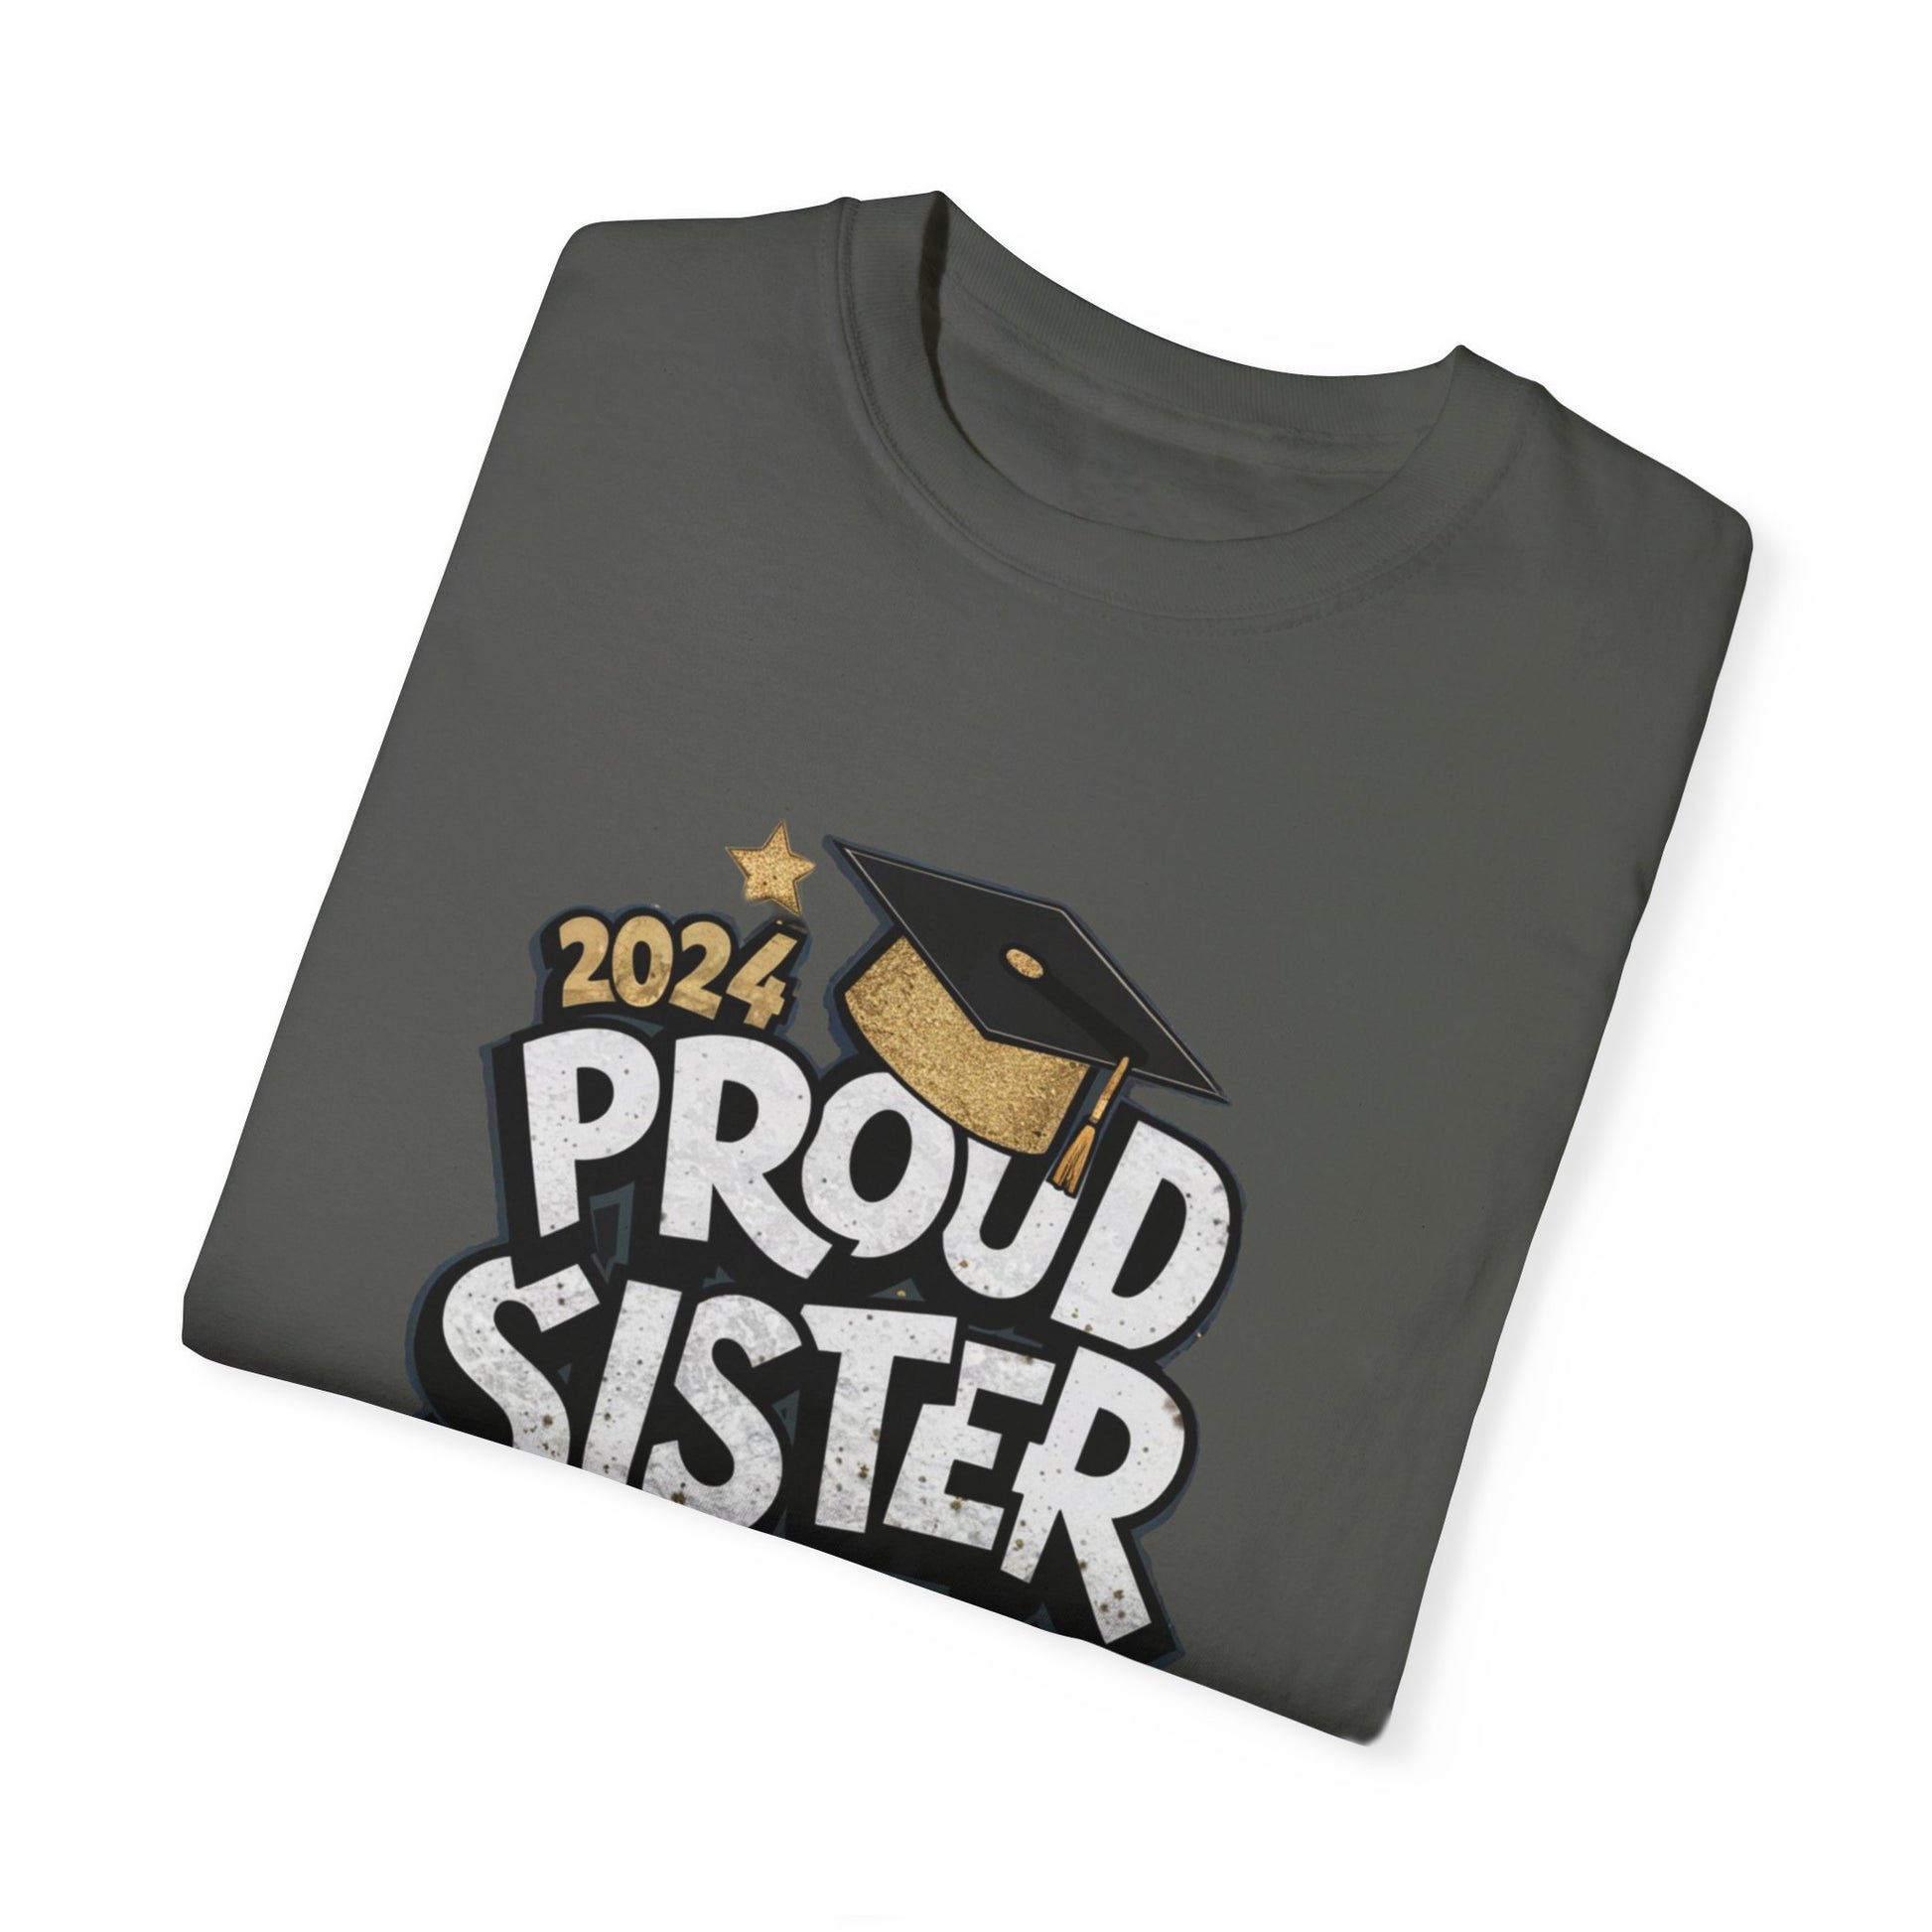 Proud Sister of a 2024 Graduate Unisex Garment-dyed T-shirt Cotton Funny Humorous Graphic Soft Premium Unisex Men Women Pepper T-shirt Birthday Gift-50